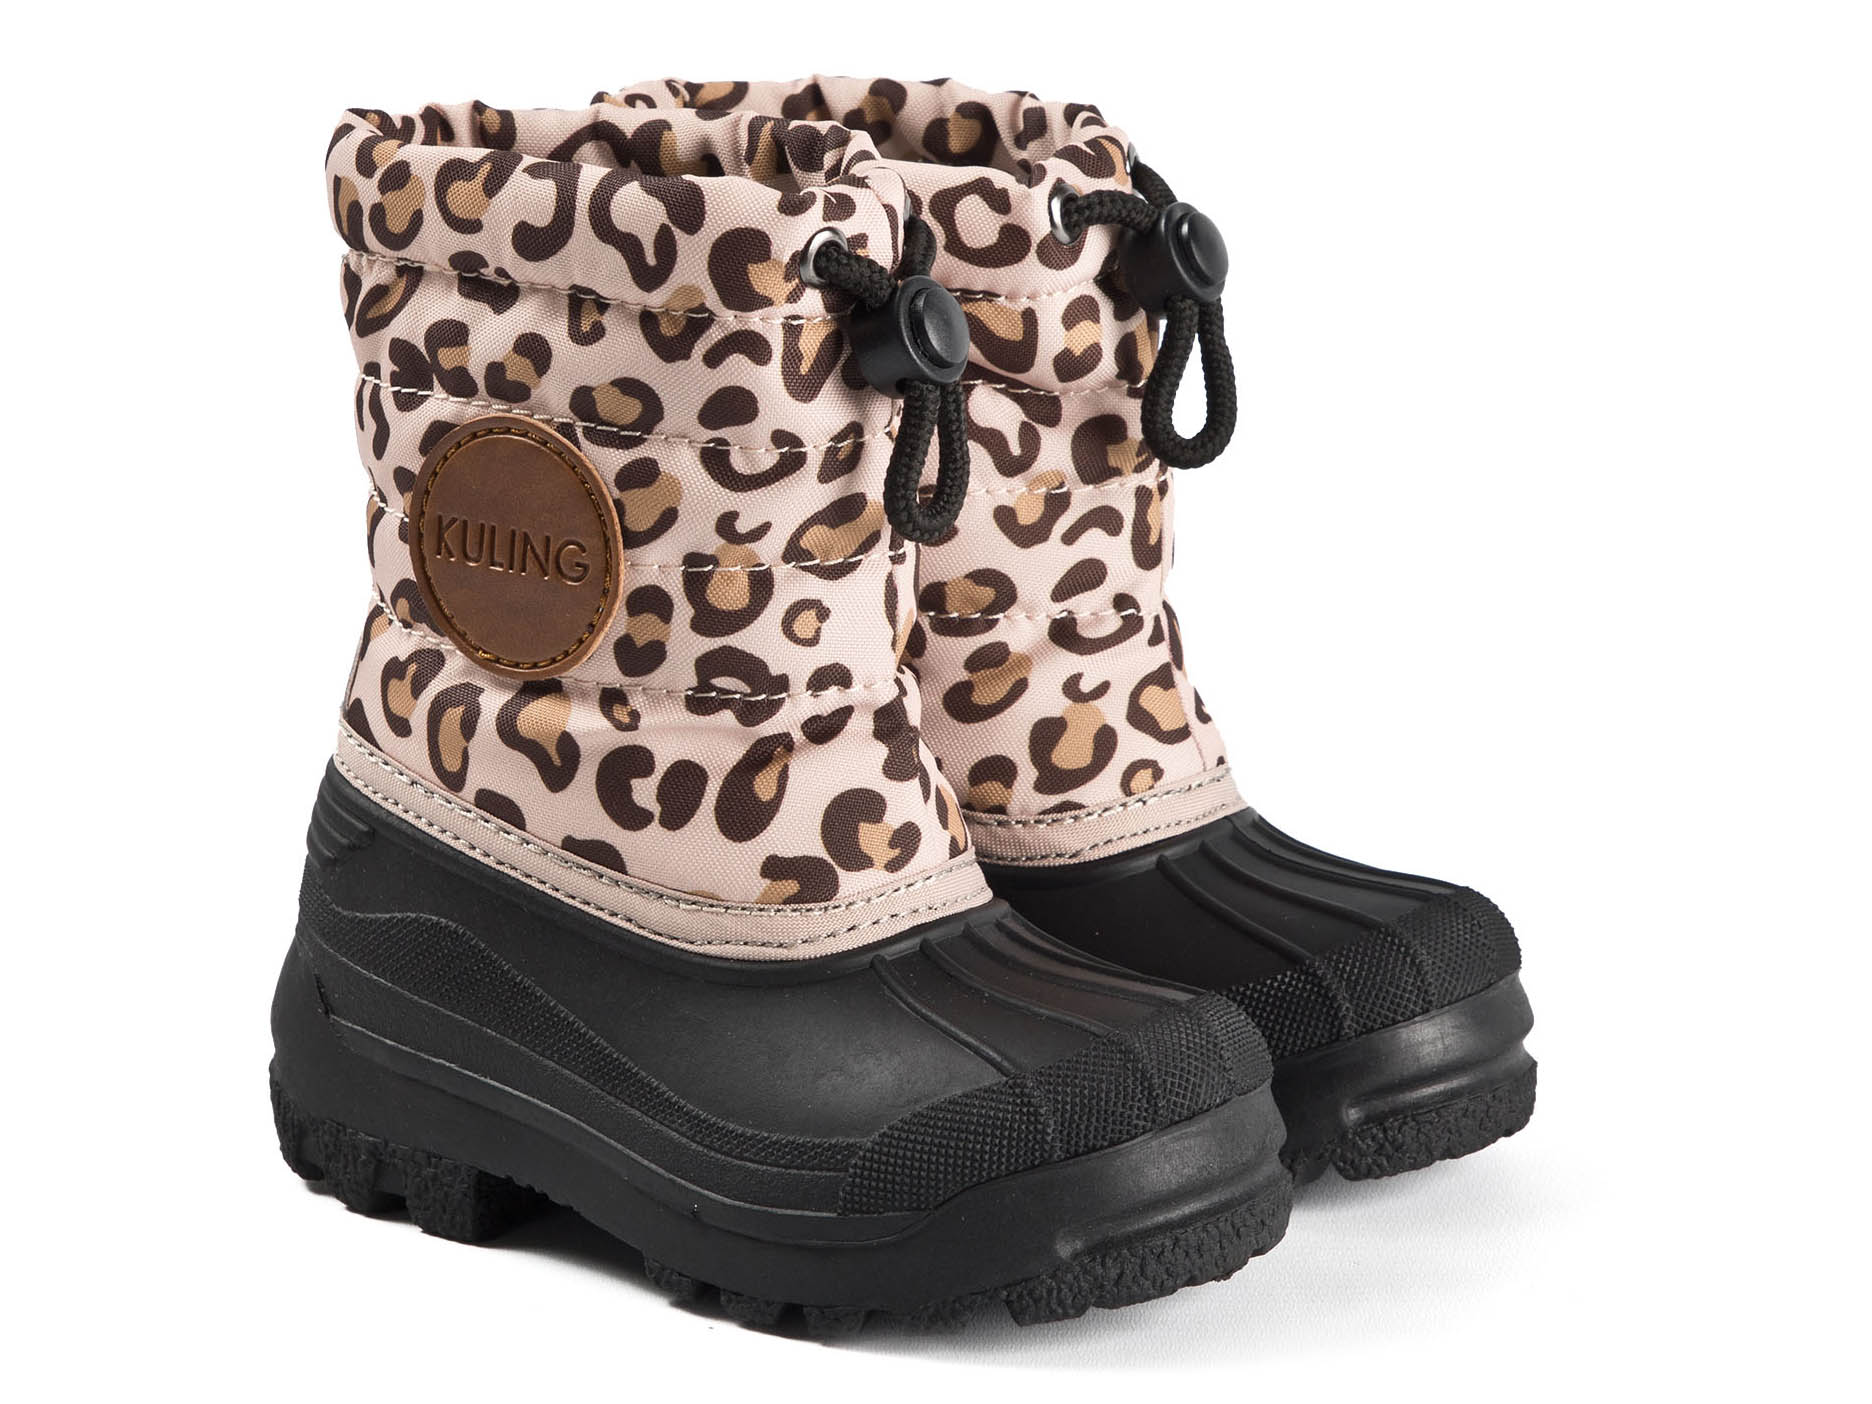 boatilus snow boots